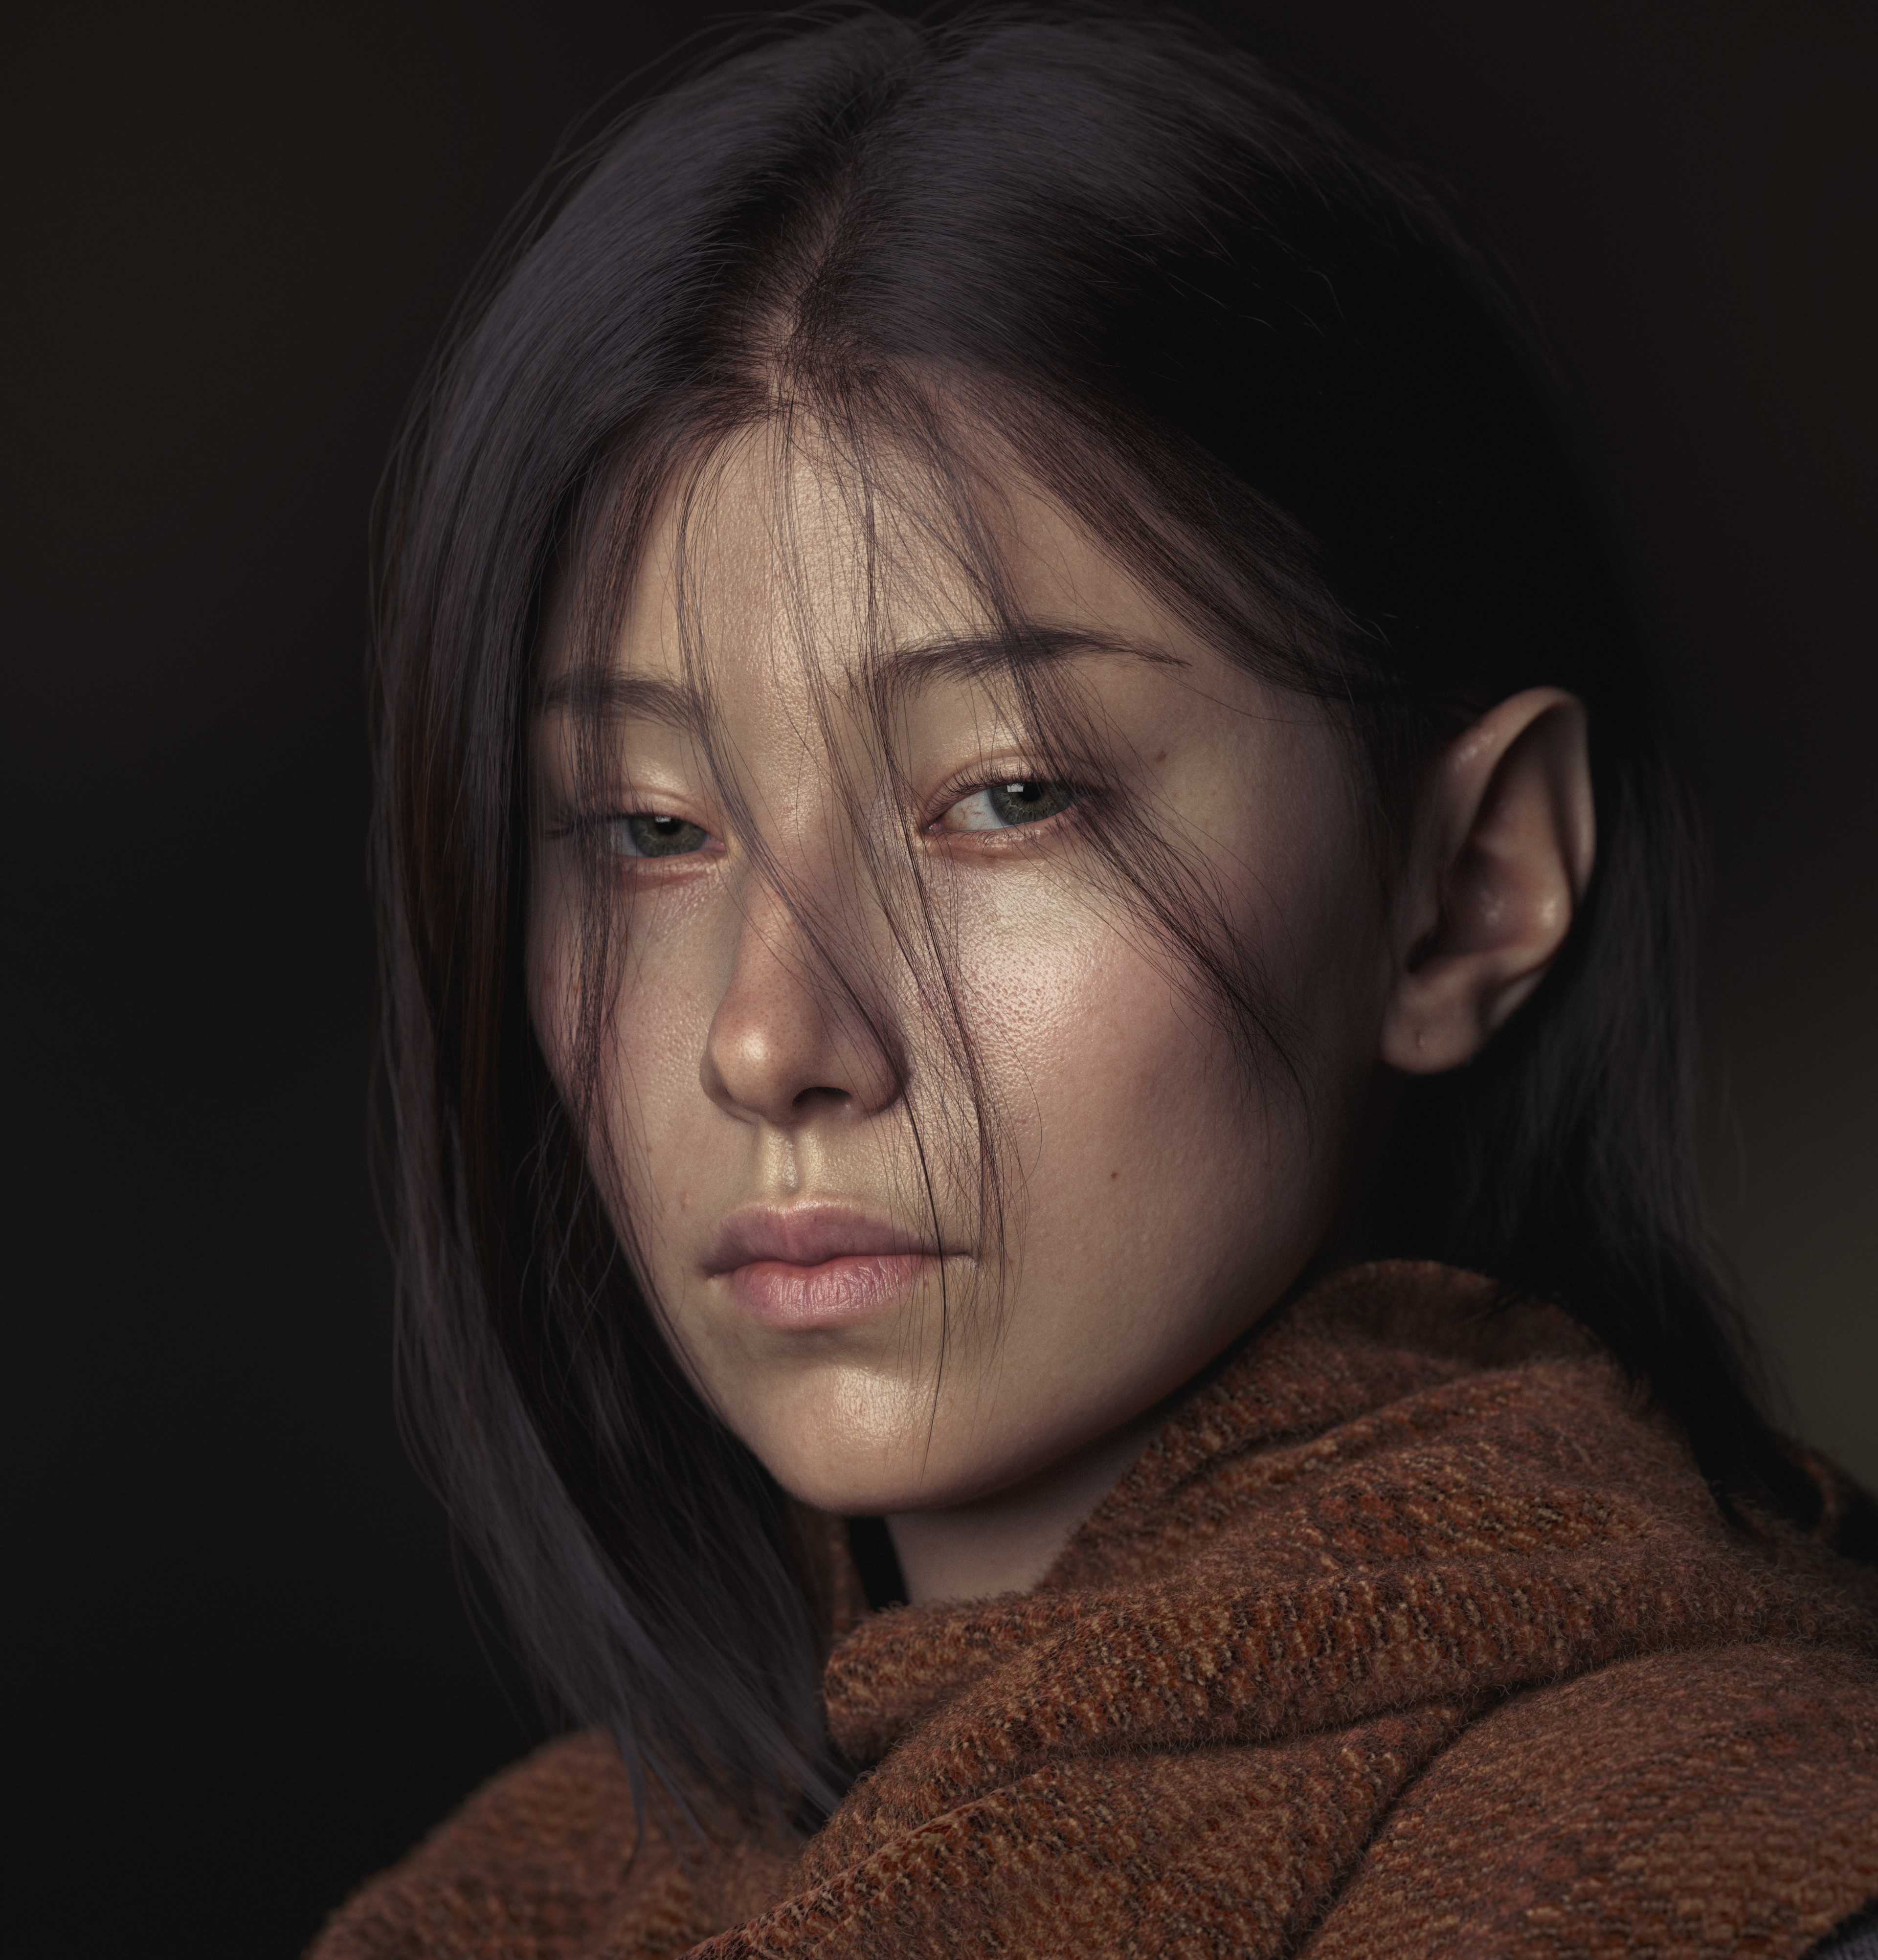 Asian Women Digital Art Artwork Face Portrait Dark Hair Dark Background Hair In Face Looking At View 3840x4008